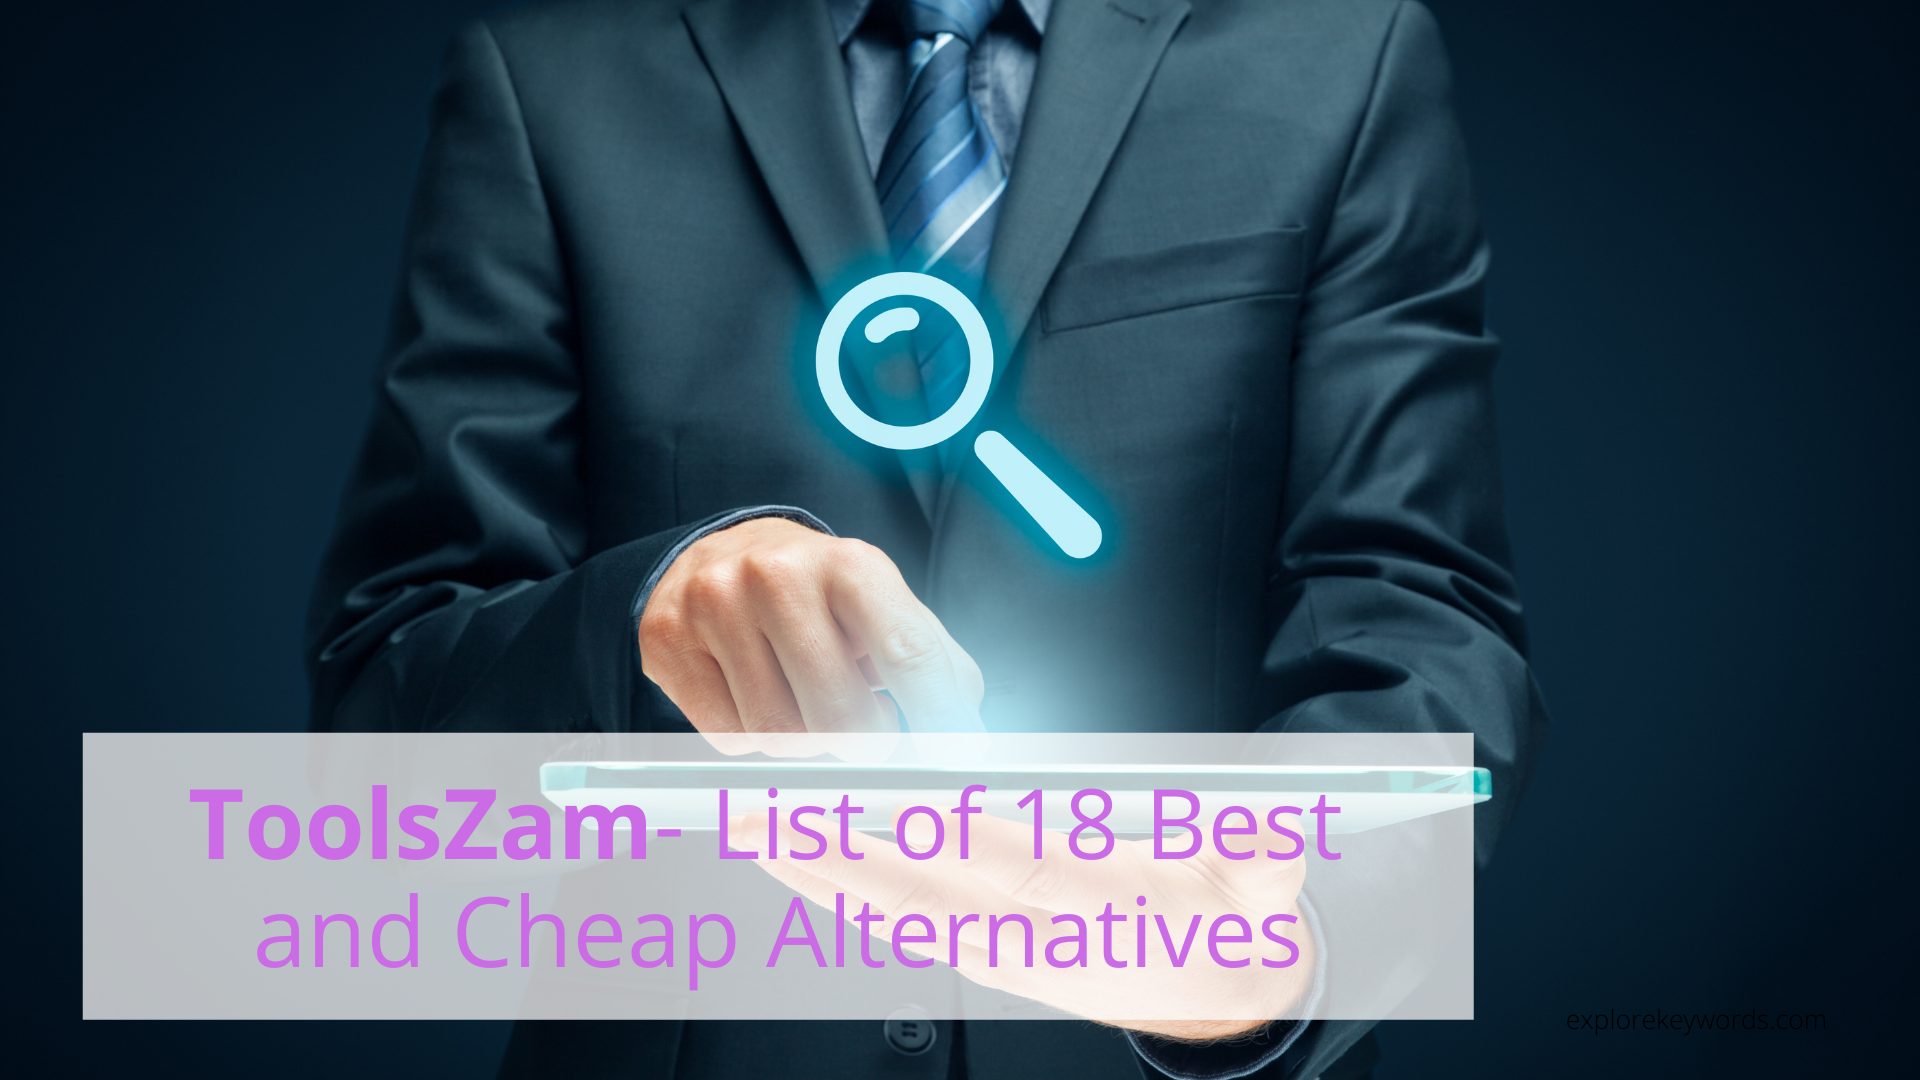 ToolsZam- List of 18 Best and Cheap Alternatives